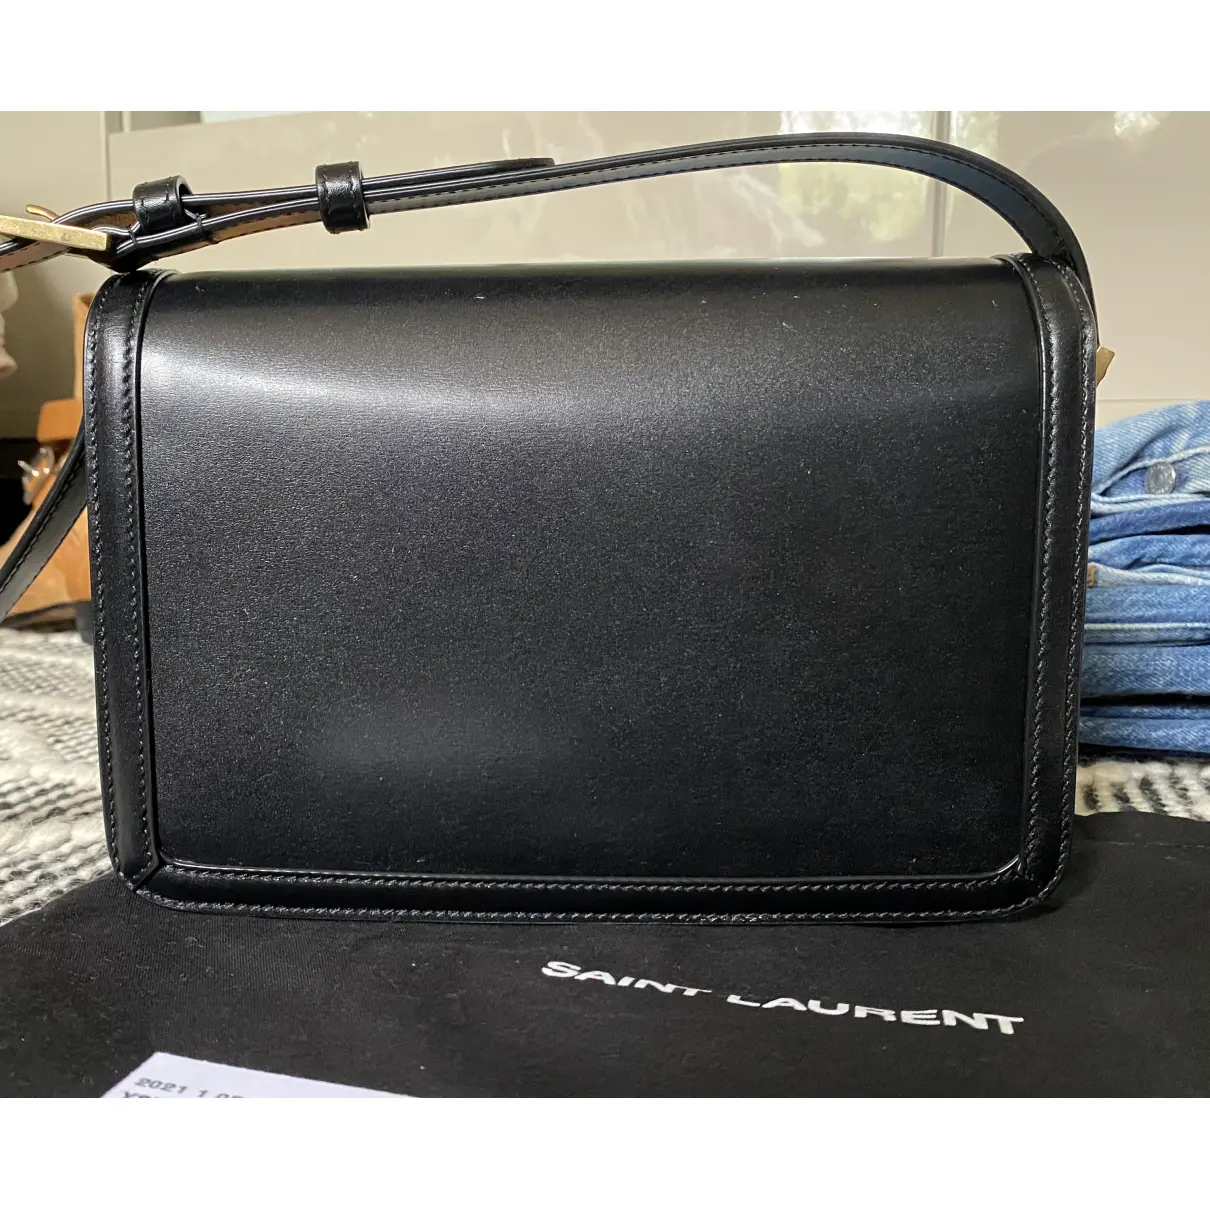 Buy Saint Laurent Solférino leather handbag online